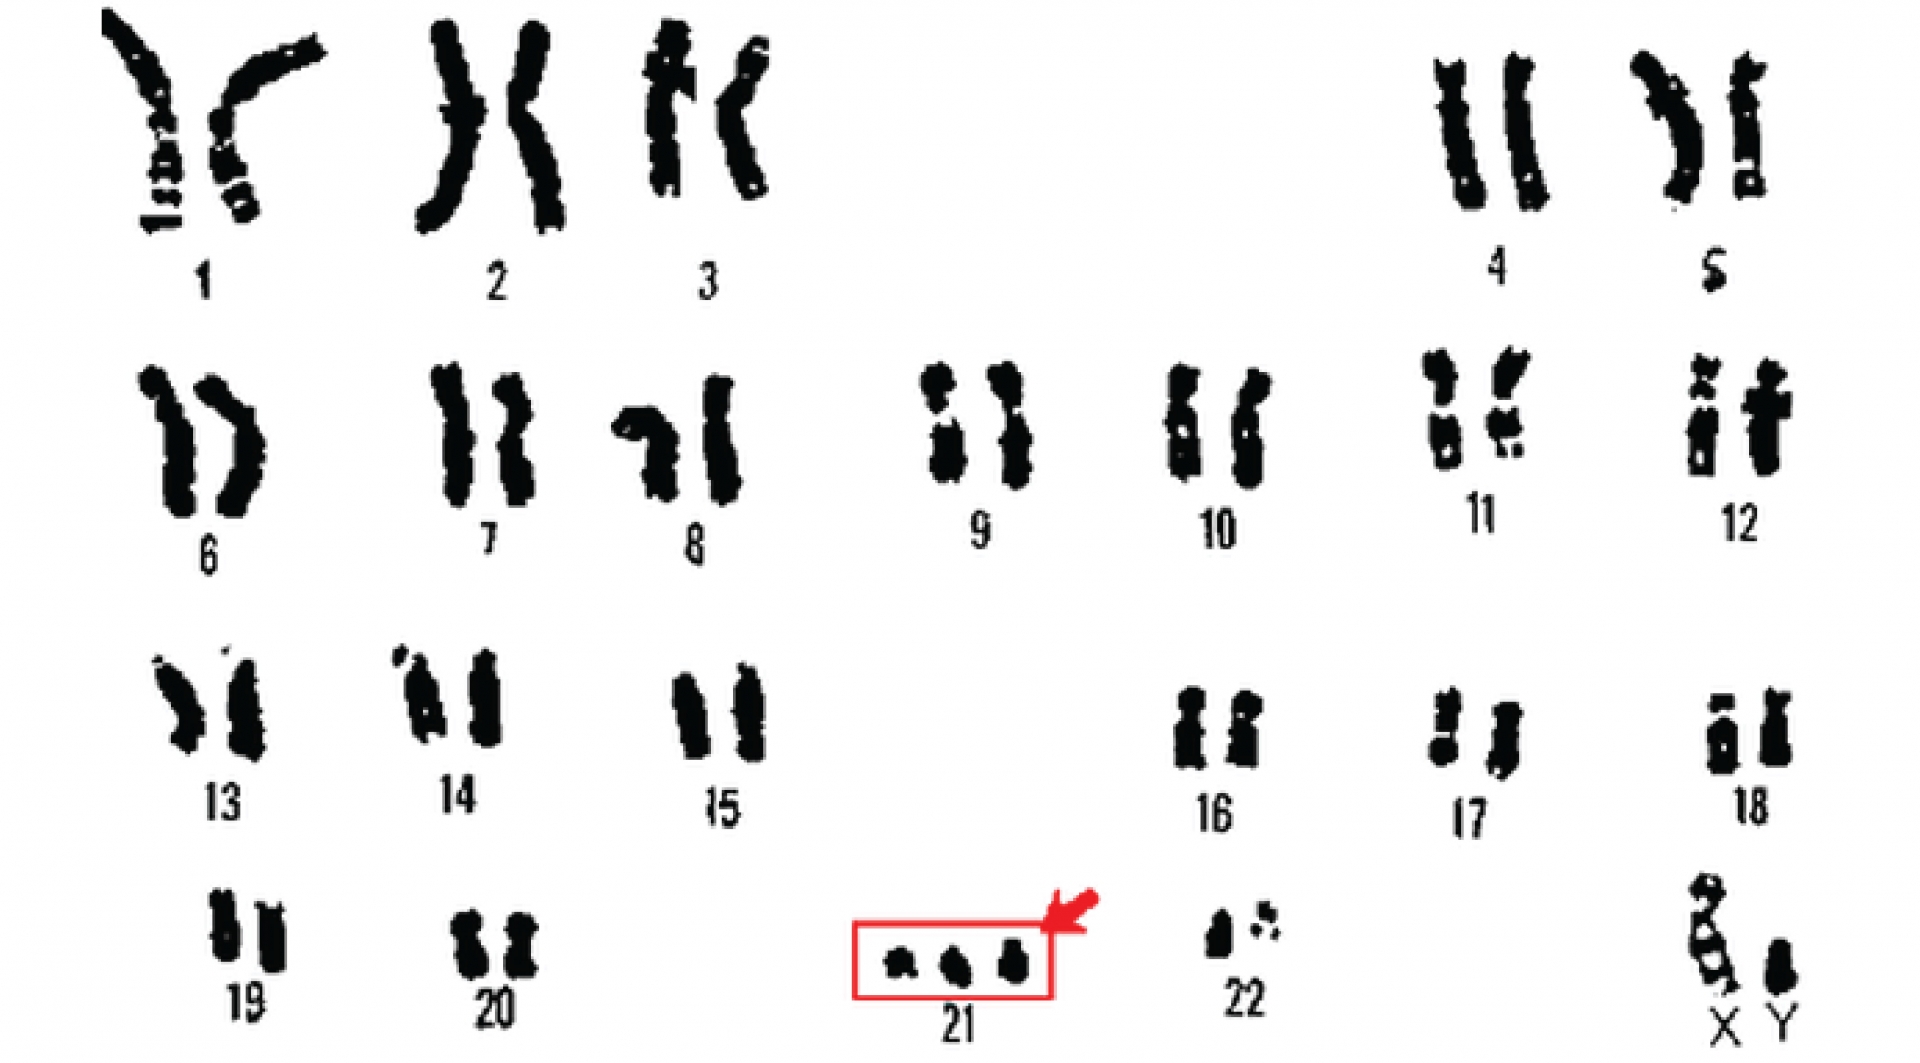 edward syndrome karyotype